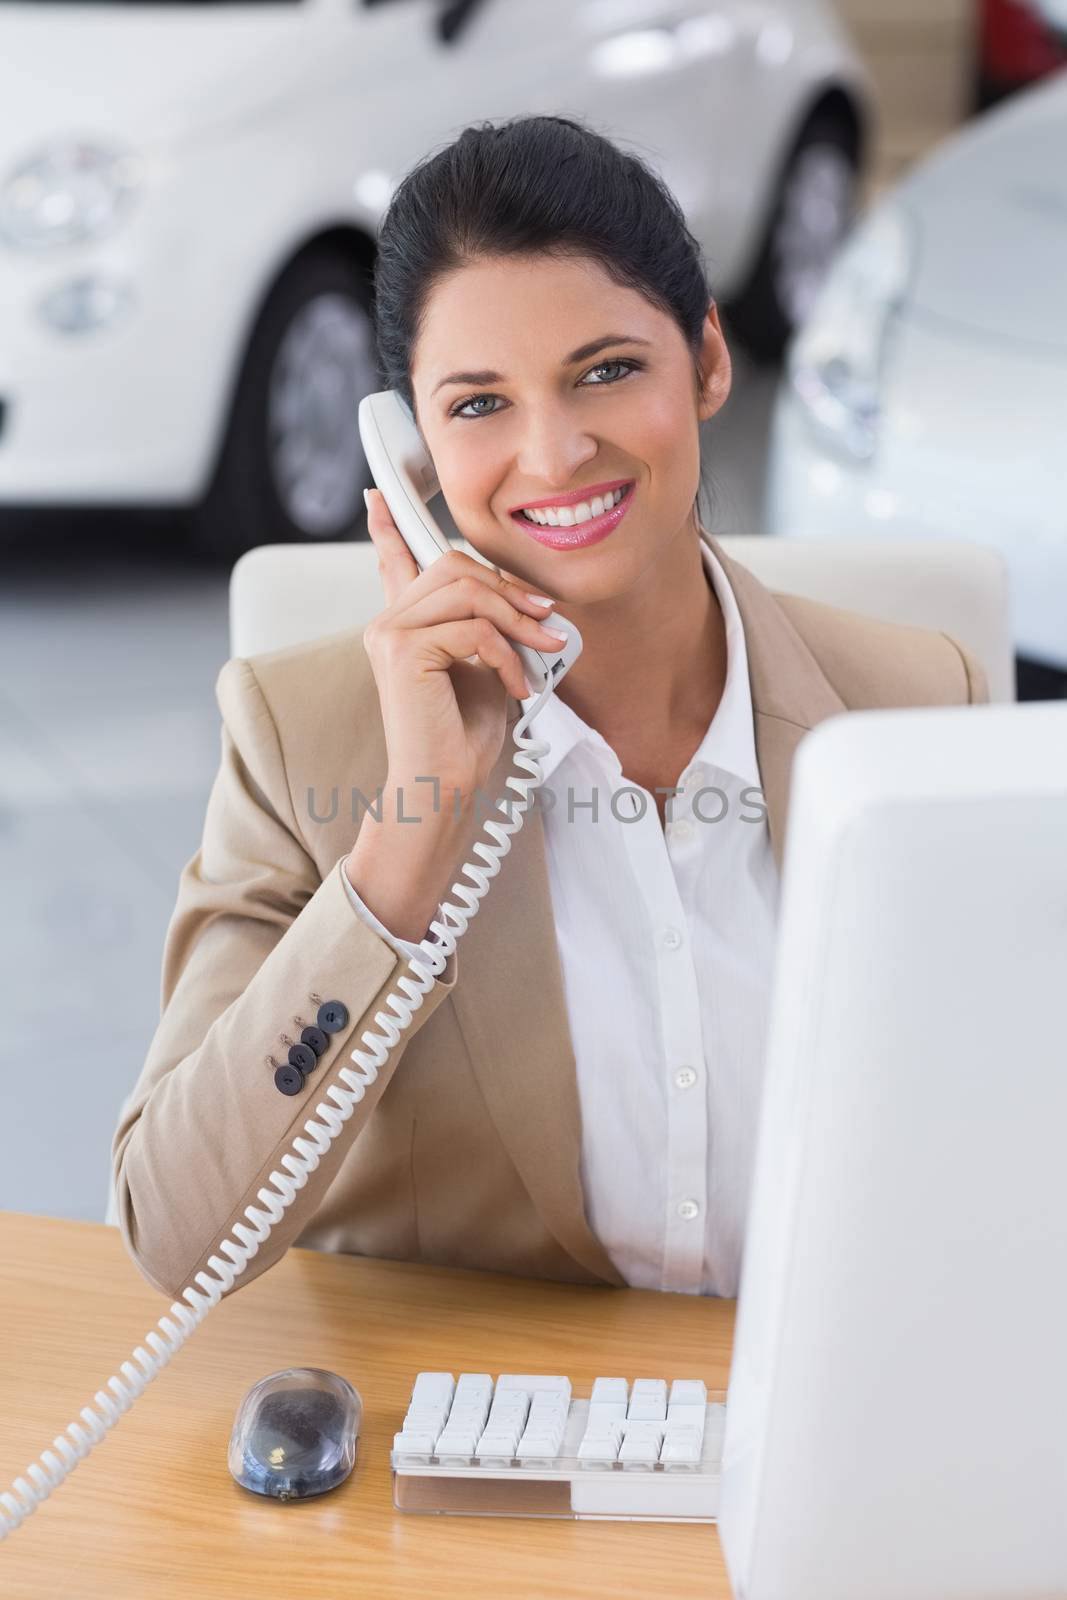 Smiling businessman making a phone call at new car showroom